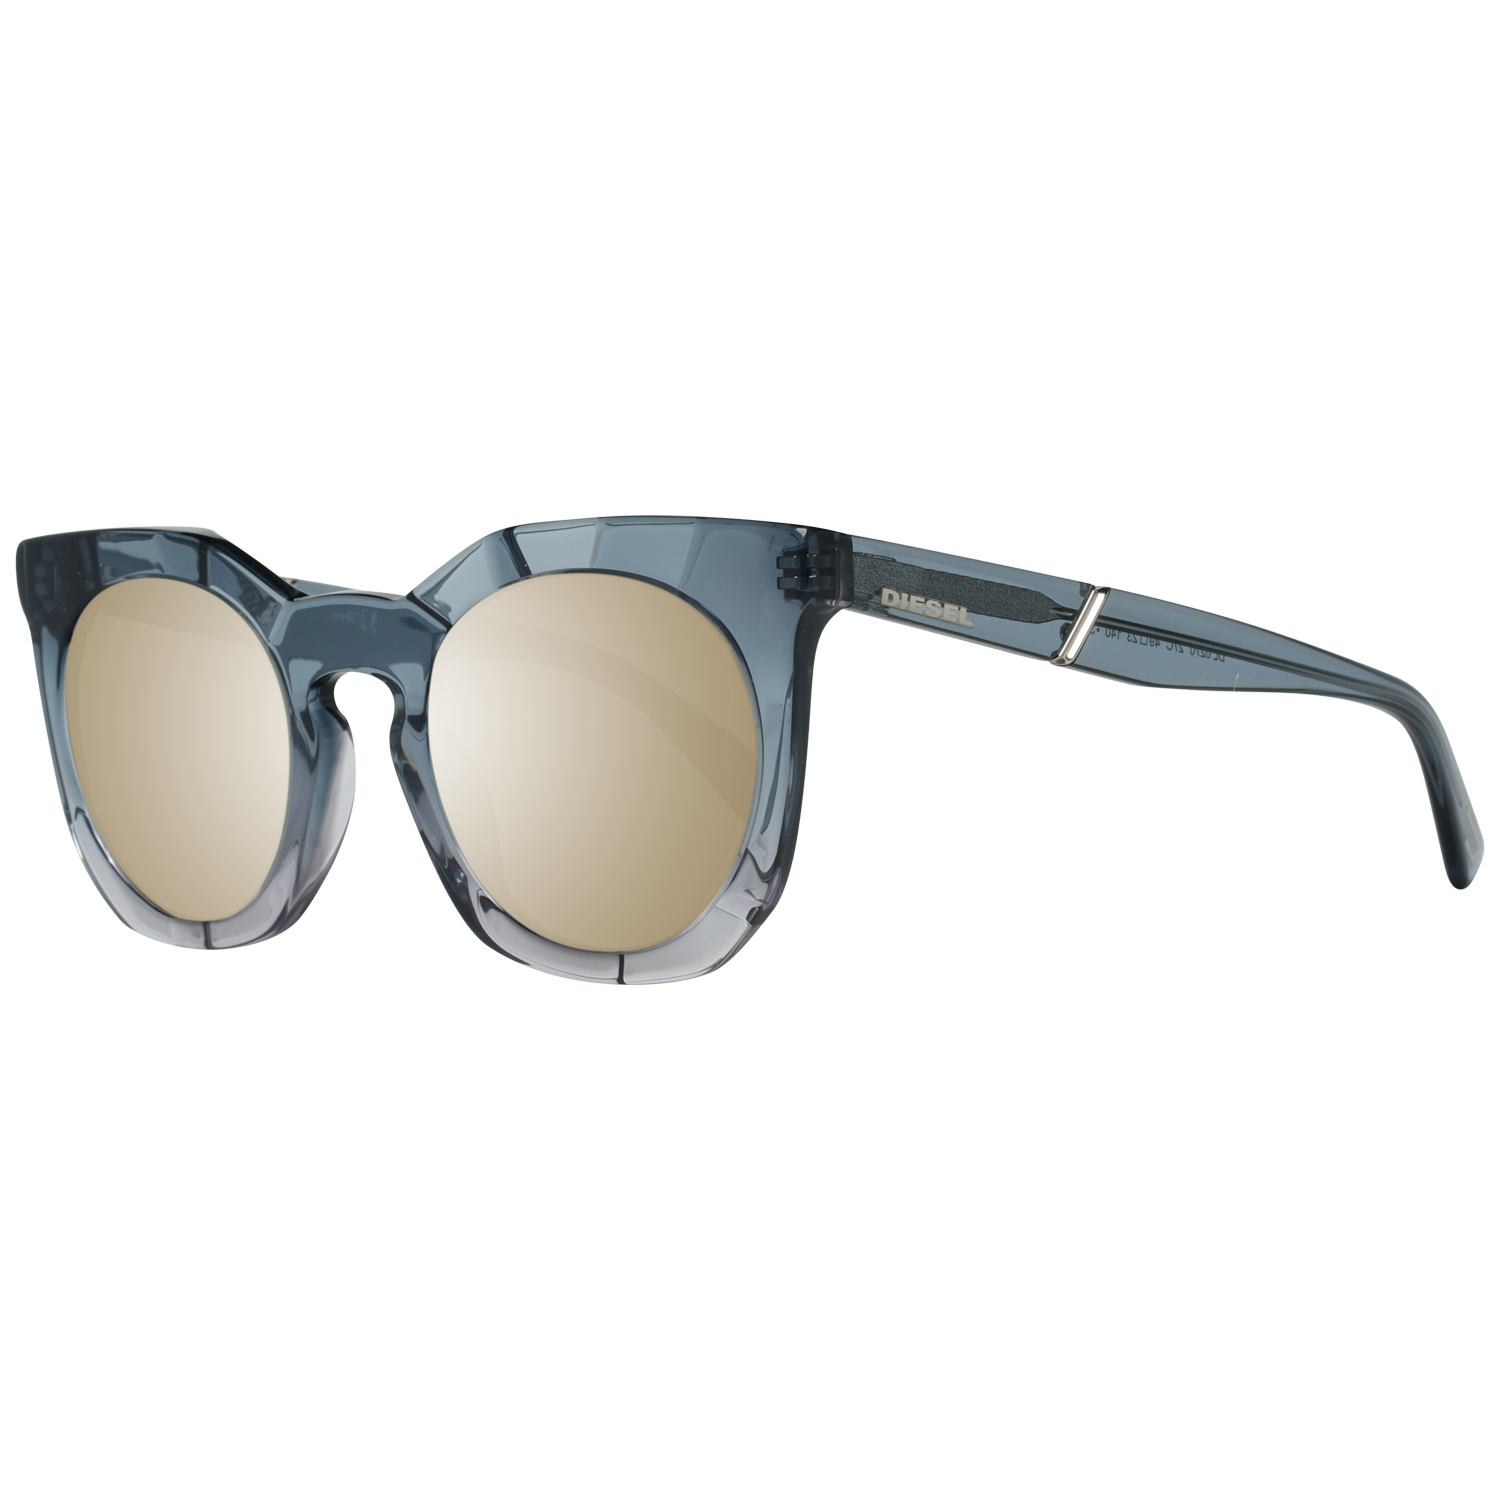 Diesel Sunglasses DL0270 27C 49